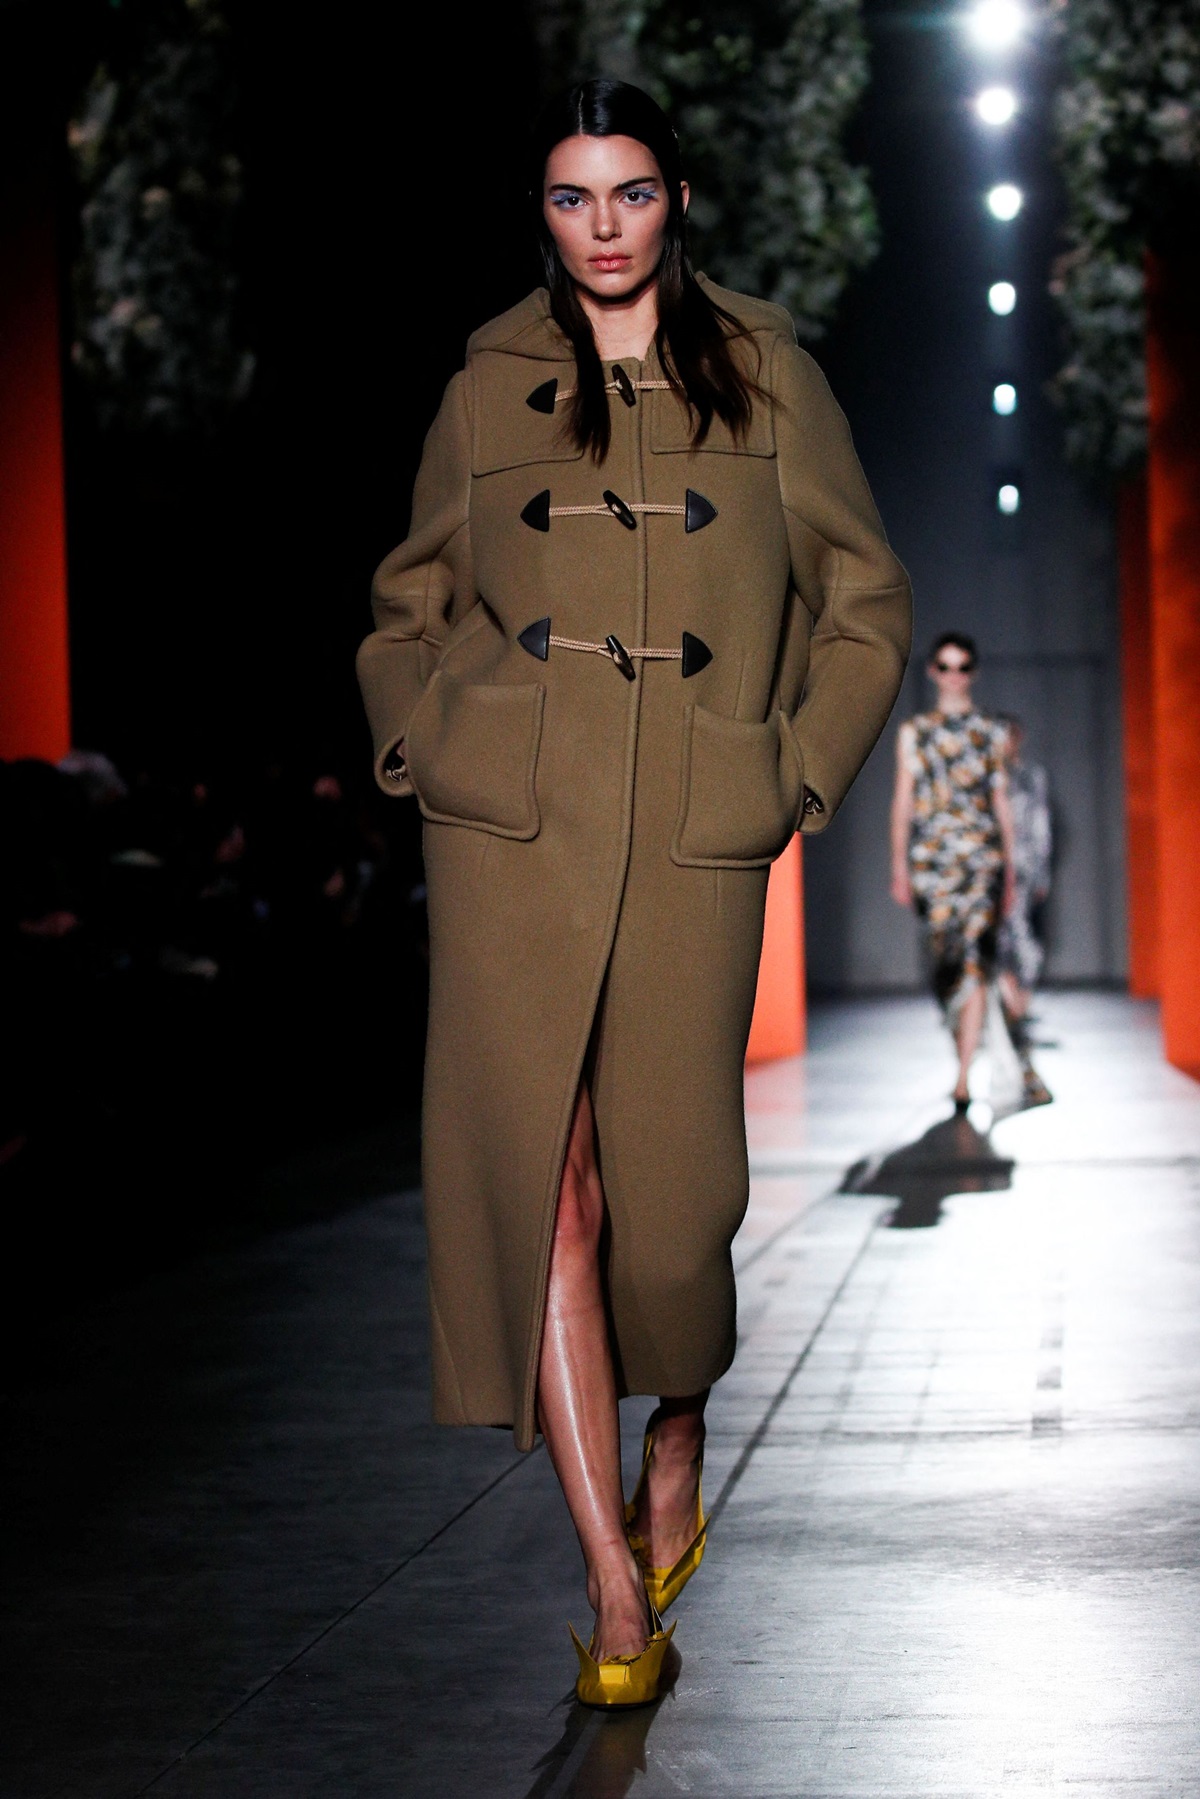 Kendall Jenner and Gigi Hadid take the runway by storm at the Prada show  during Milan Fashion Week